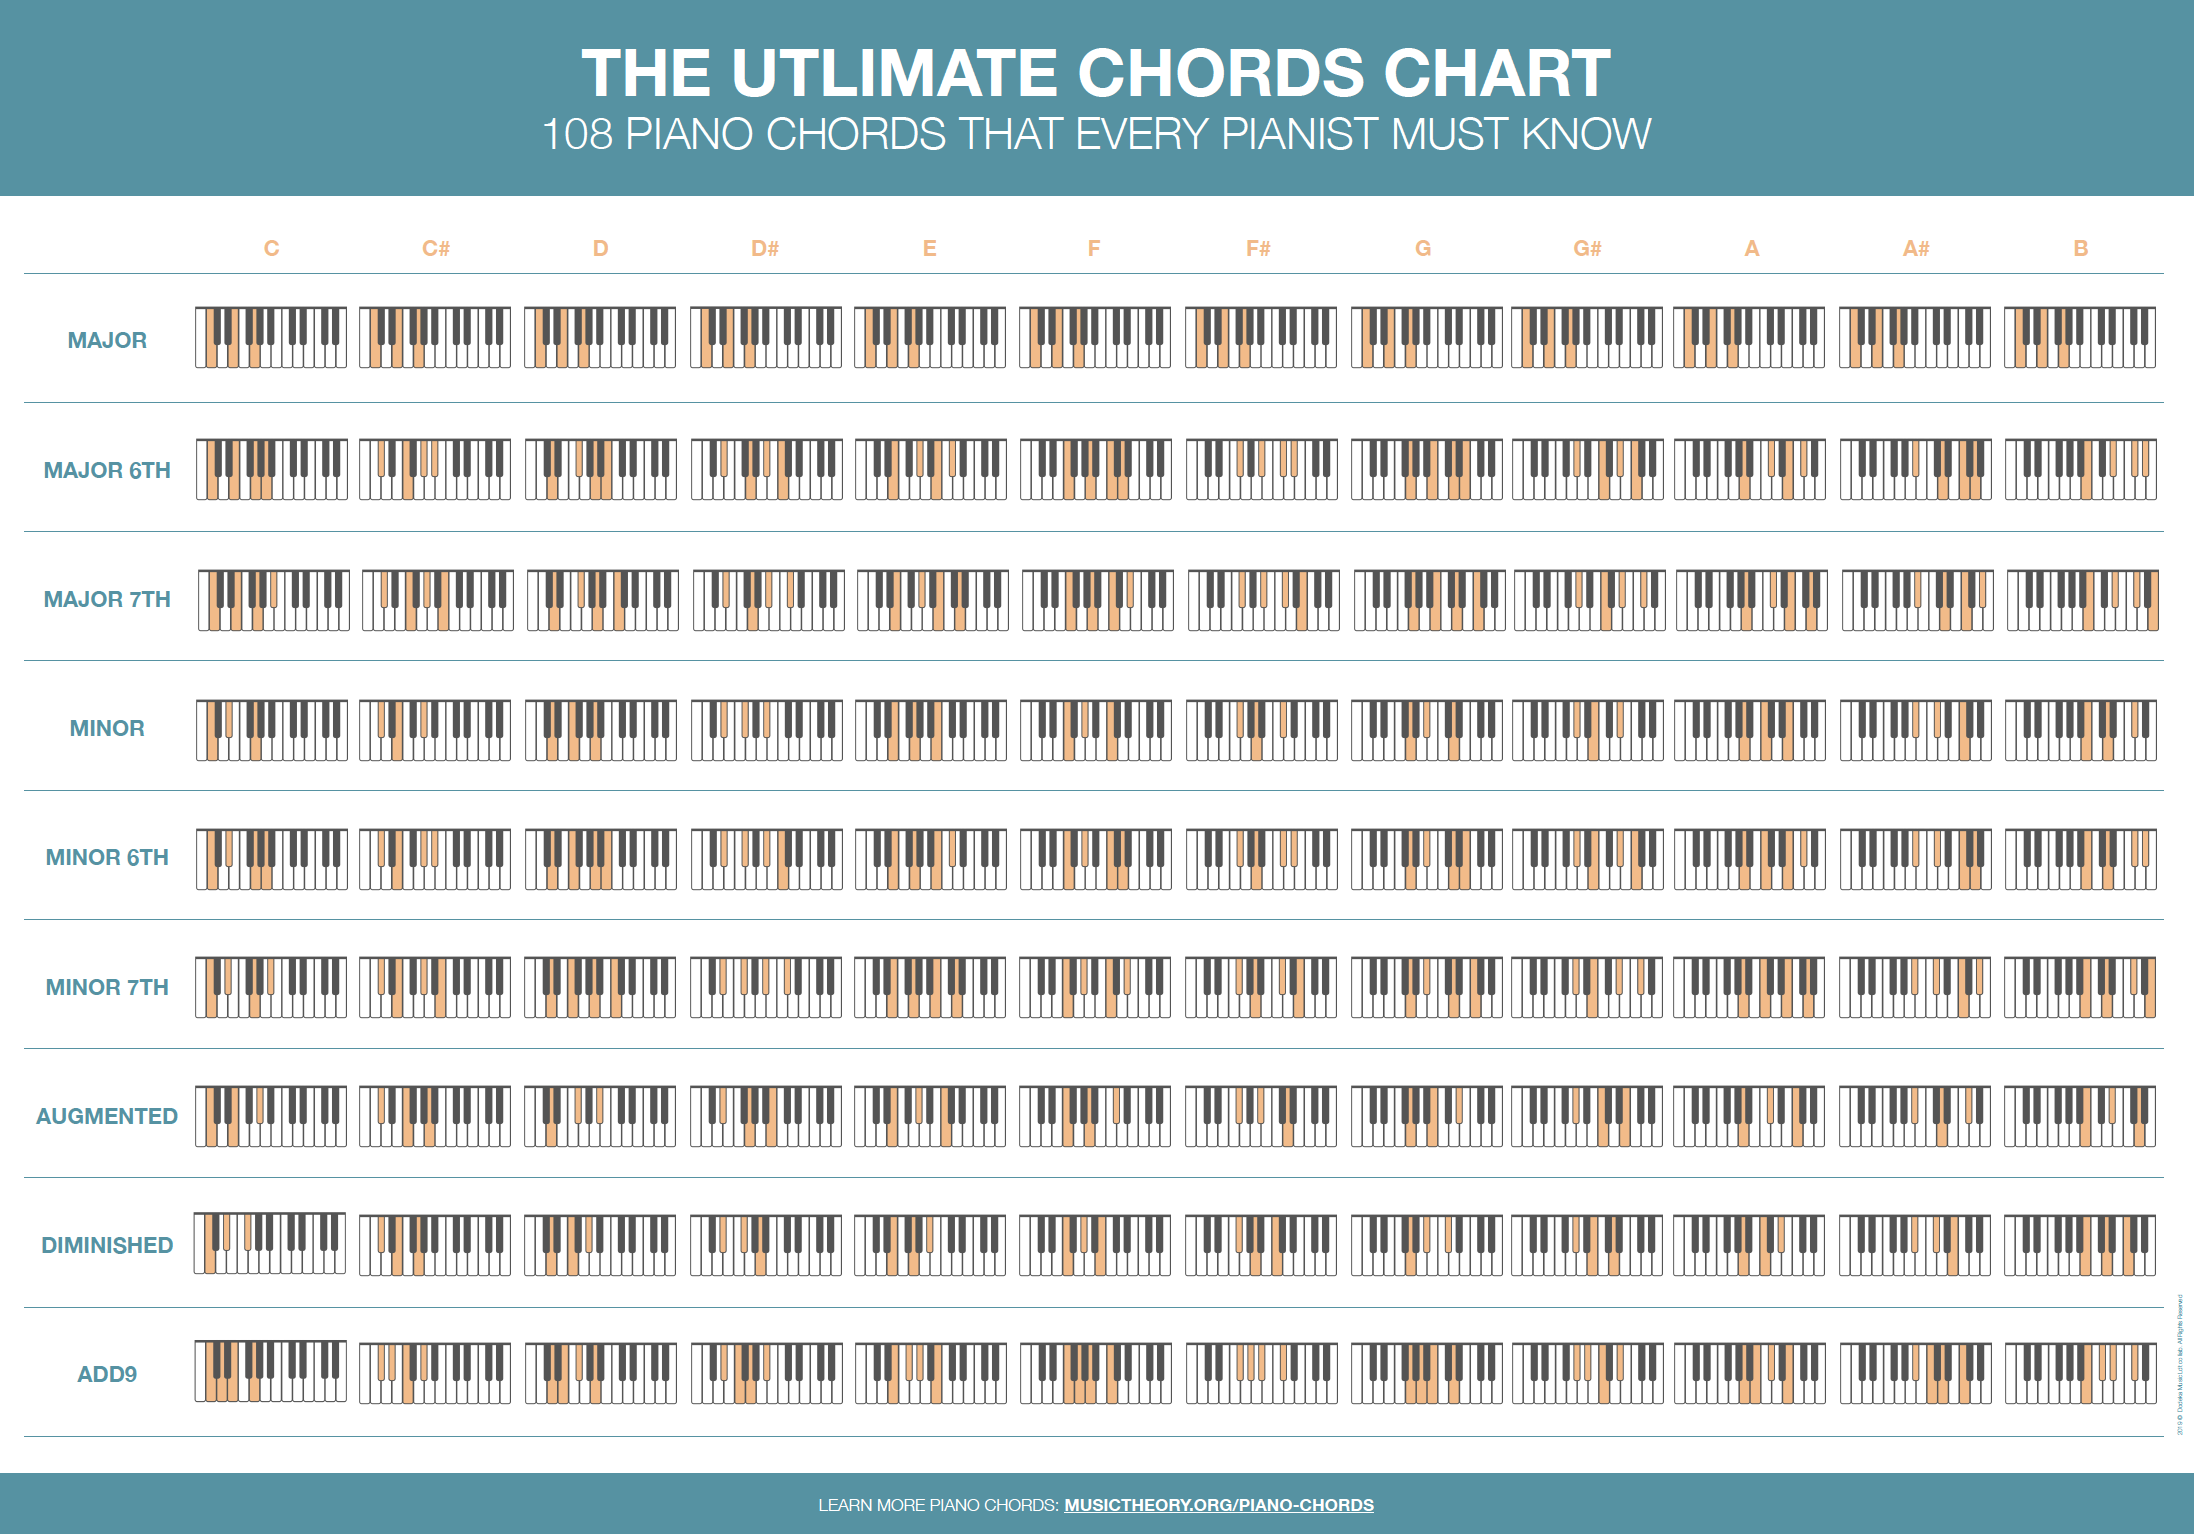 Аккорды пианино таблица. Таблица всех аккордов на пианино. Аккорды на фортепиано таблица. Аппликатура аккордов на пианино. Построение аккордов на пианино.